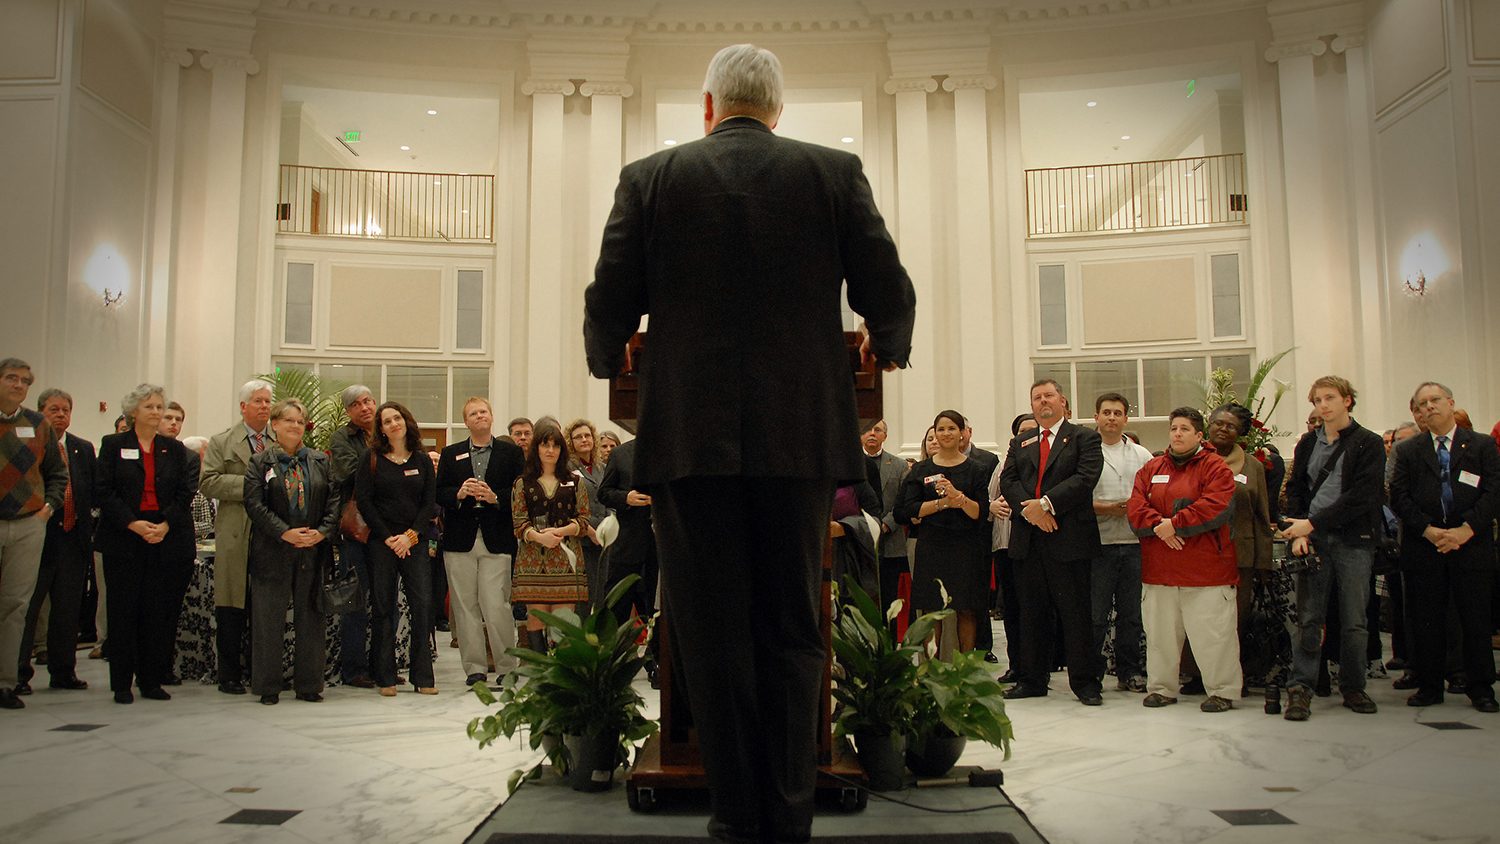 Chancellor Woodson standing at a podium